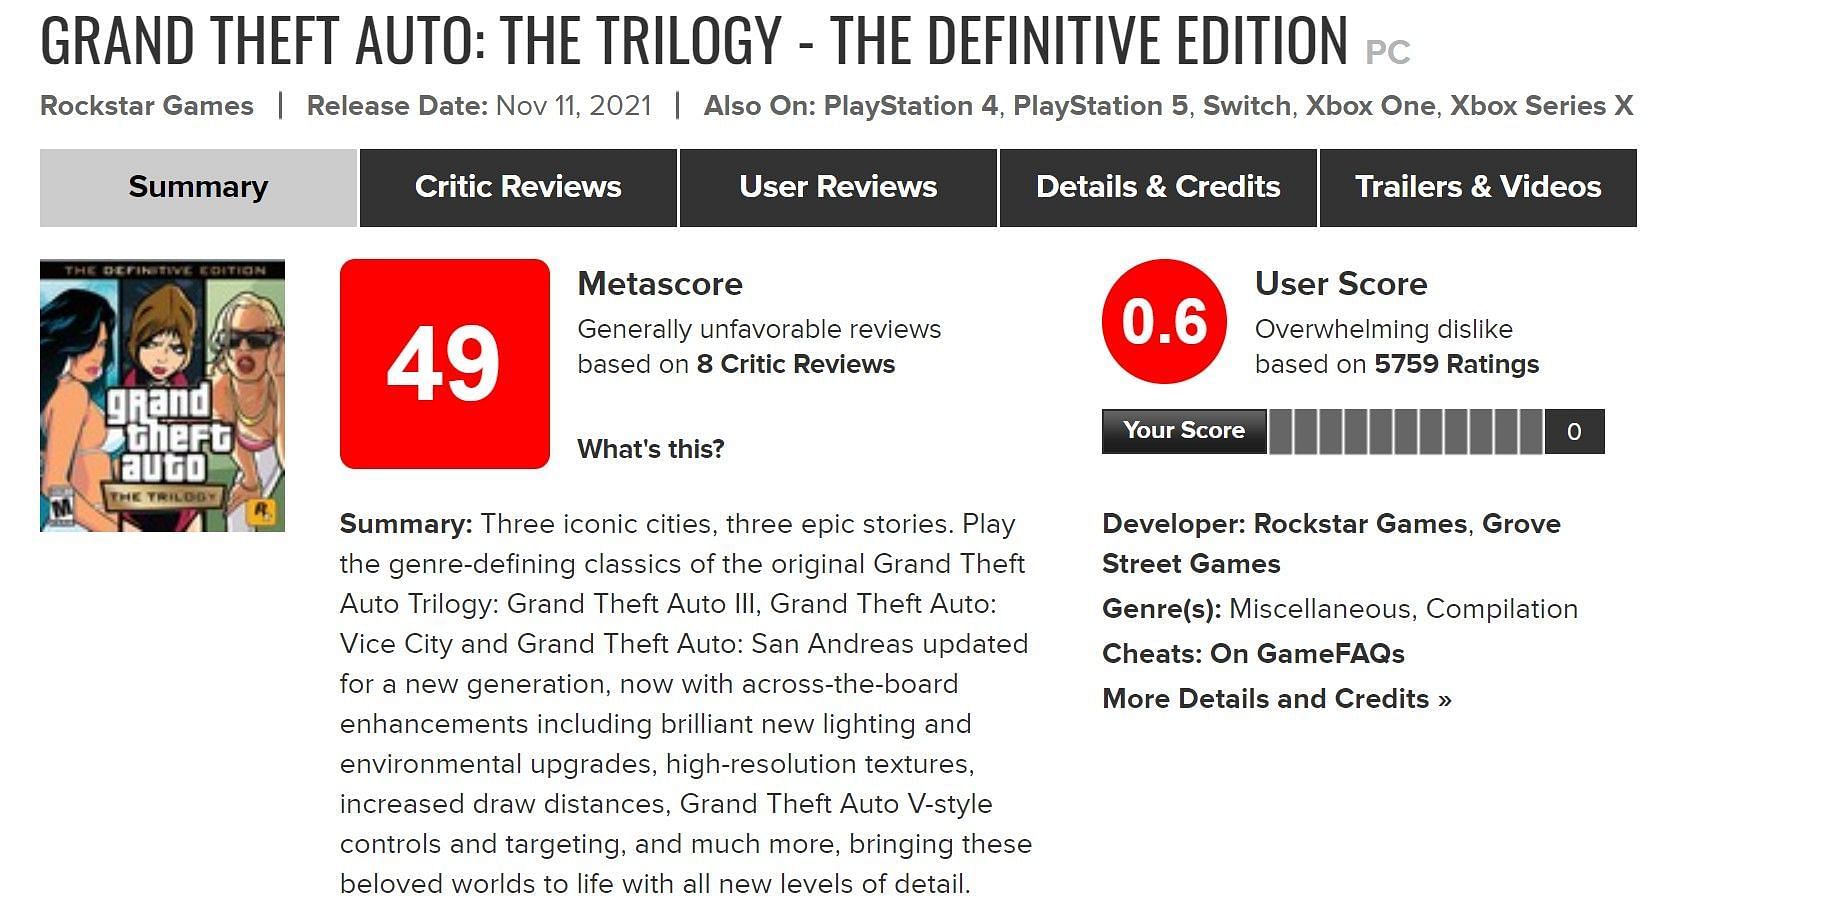 Grand Theft Auto III - The Definitive Edition - Metacritic